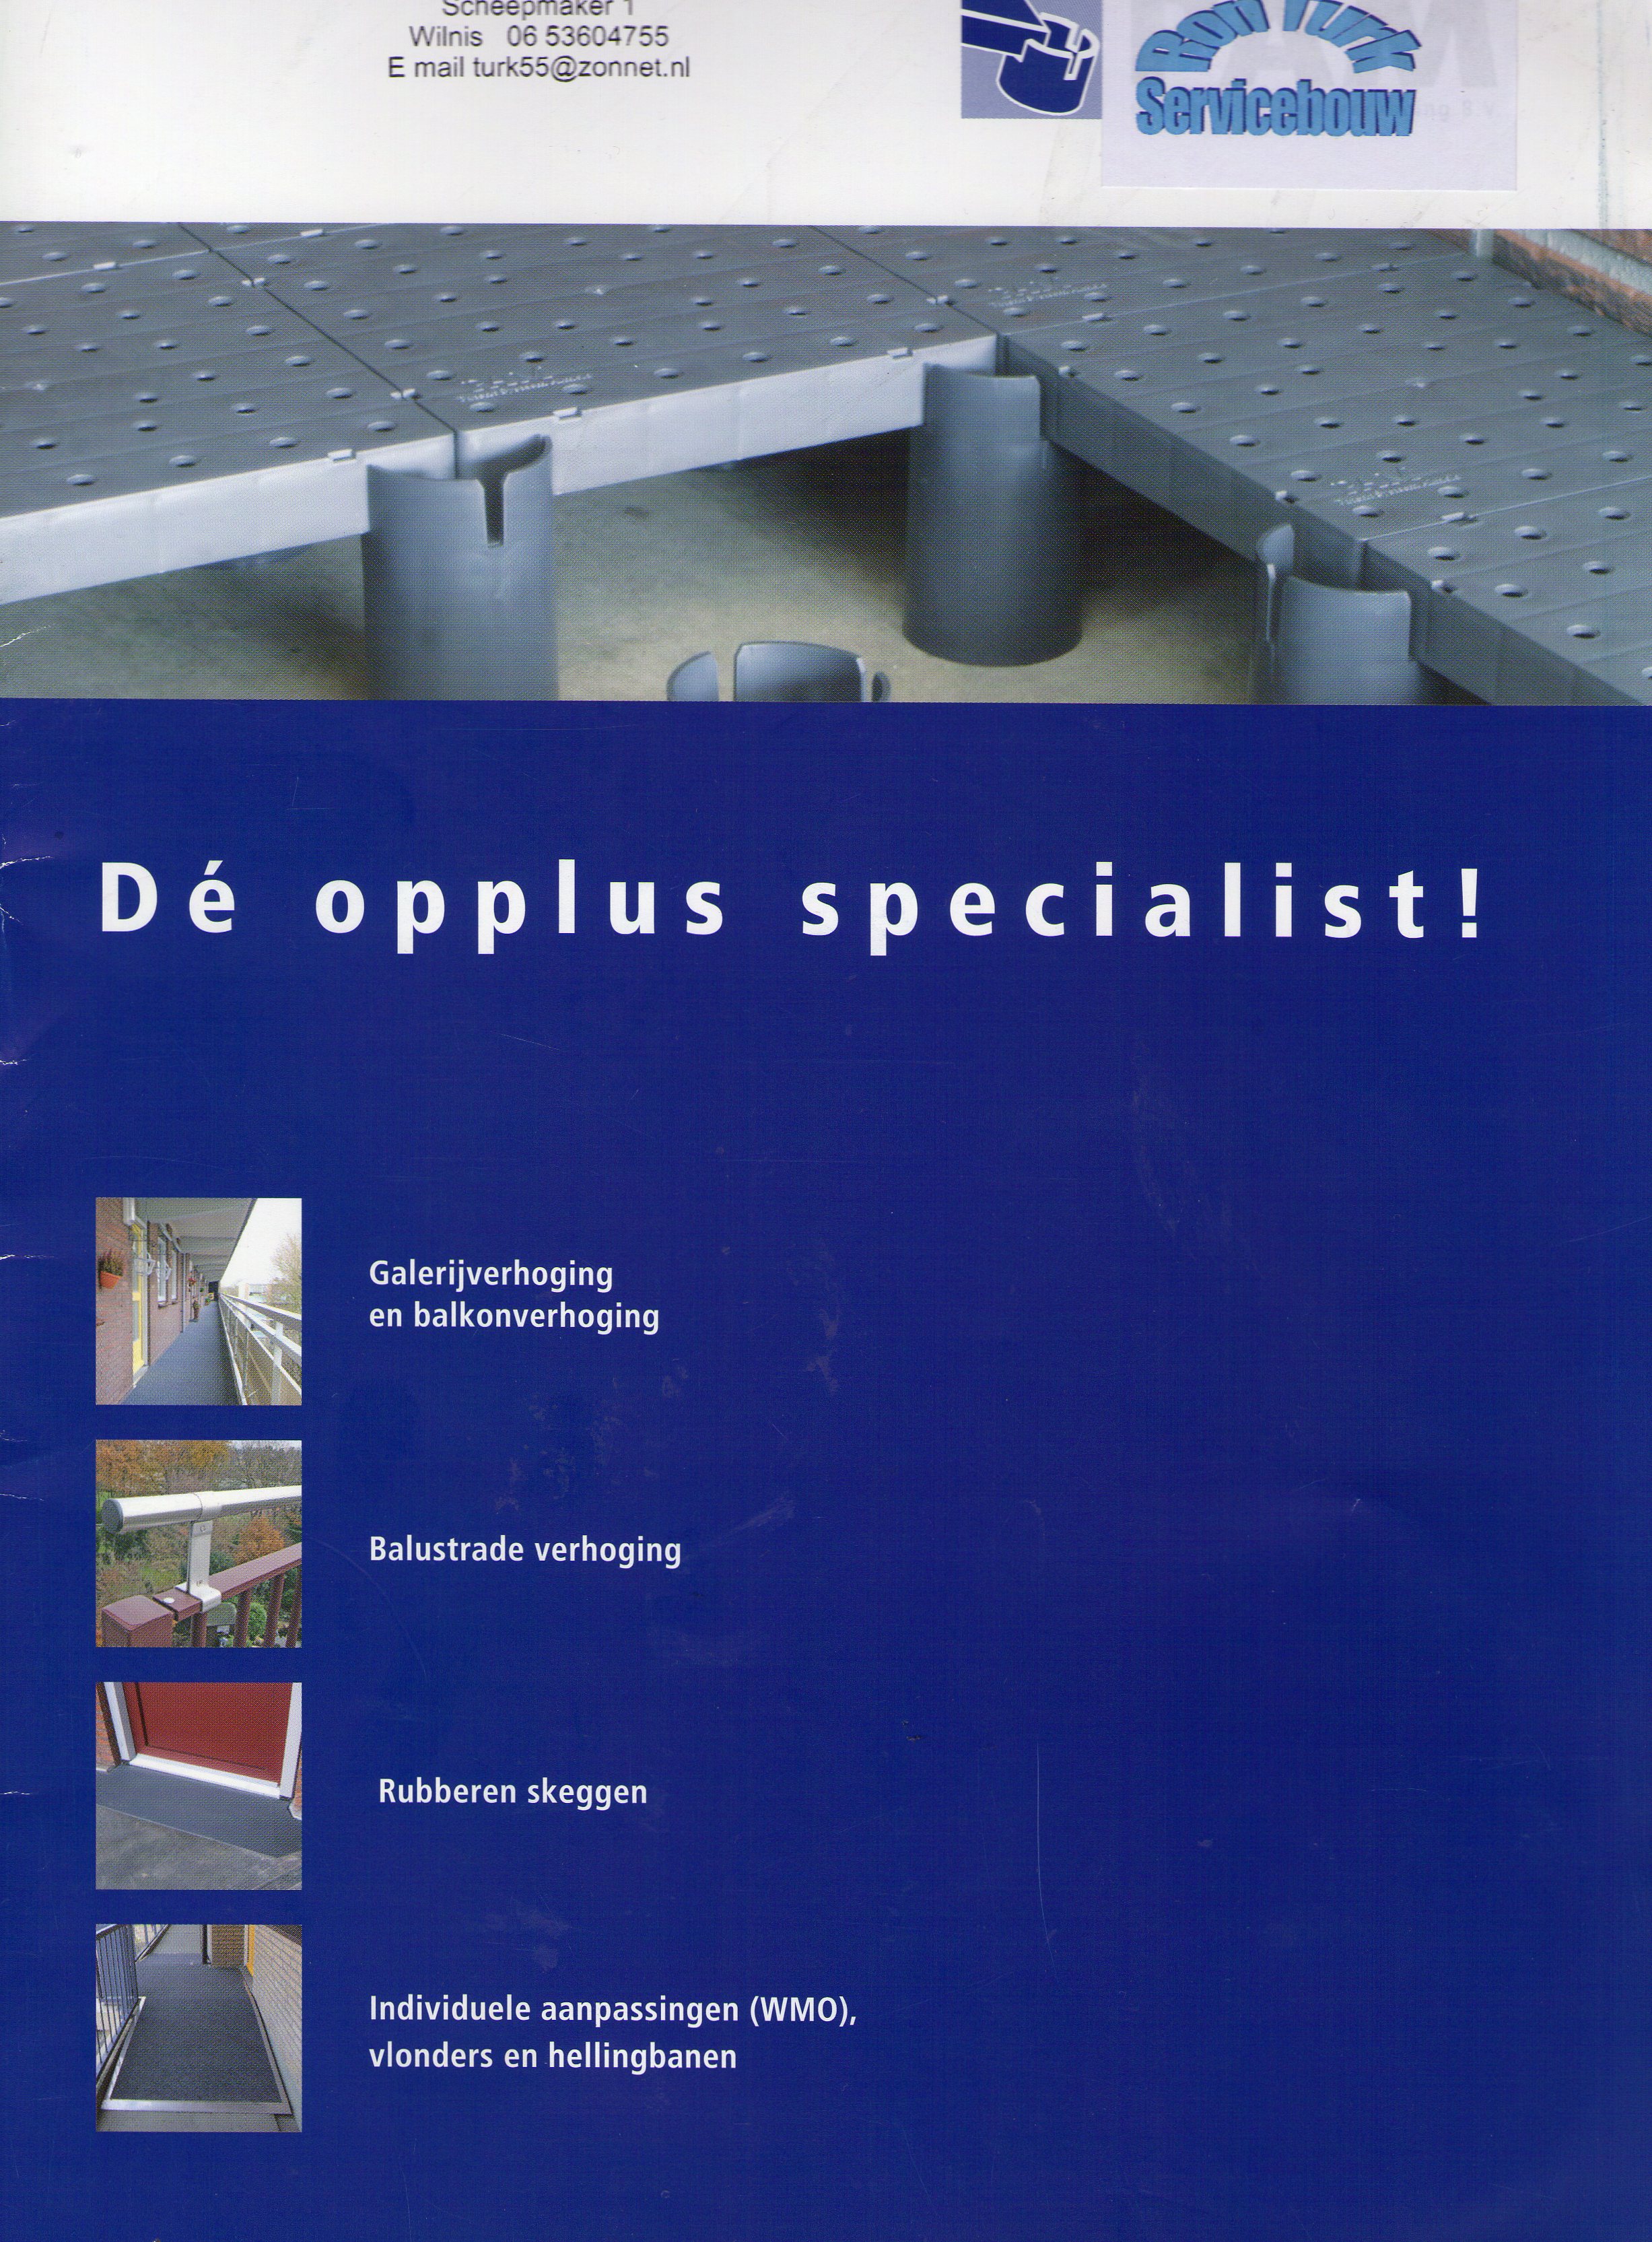 Opus specialist